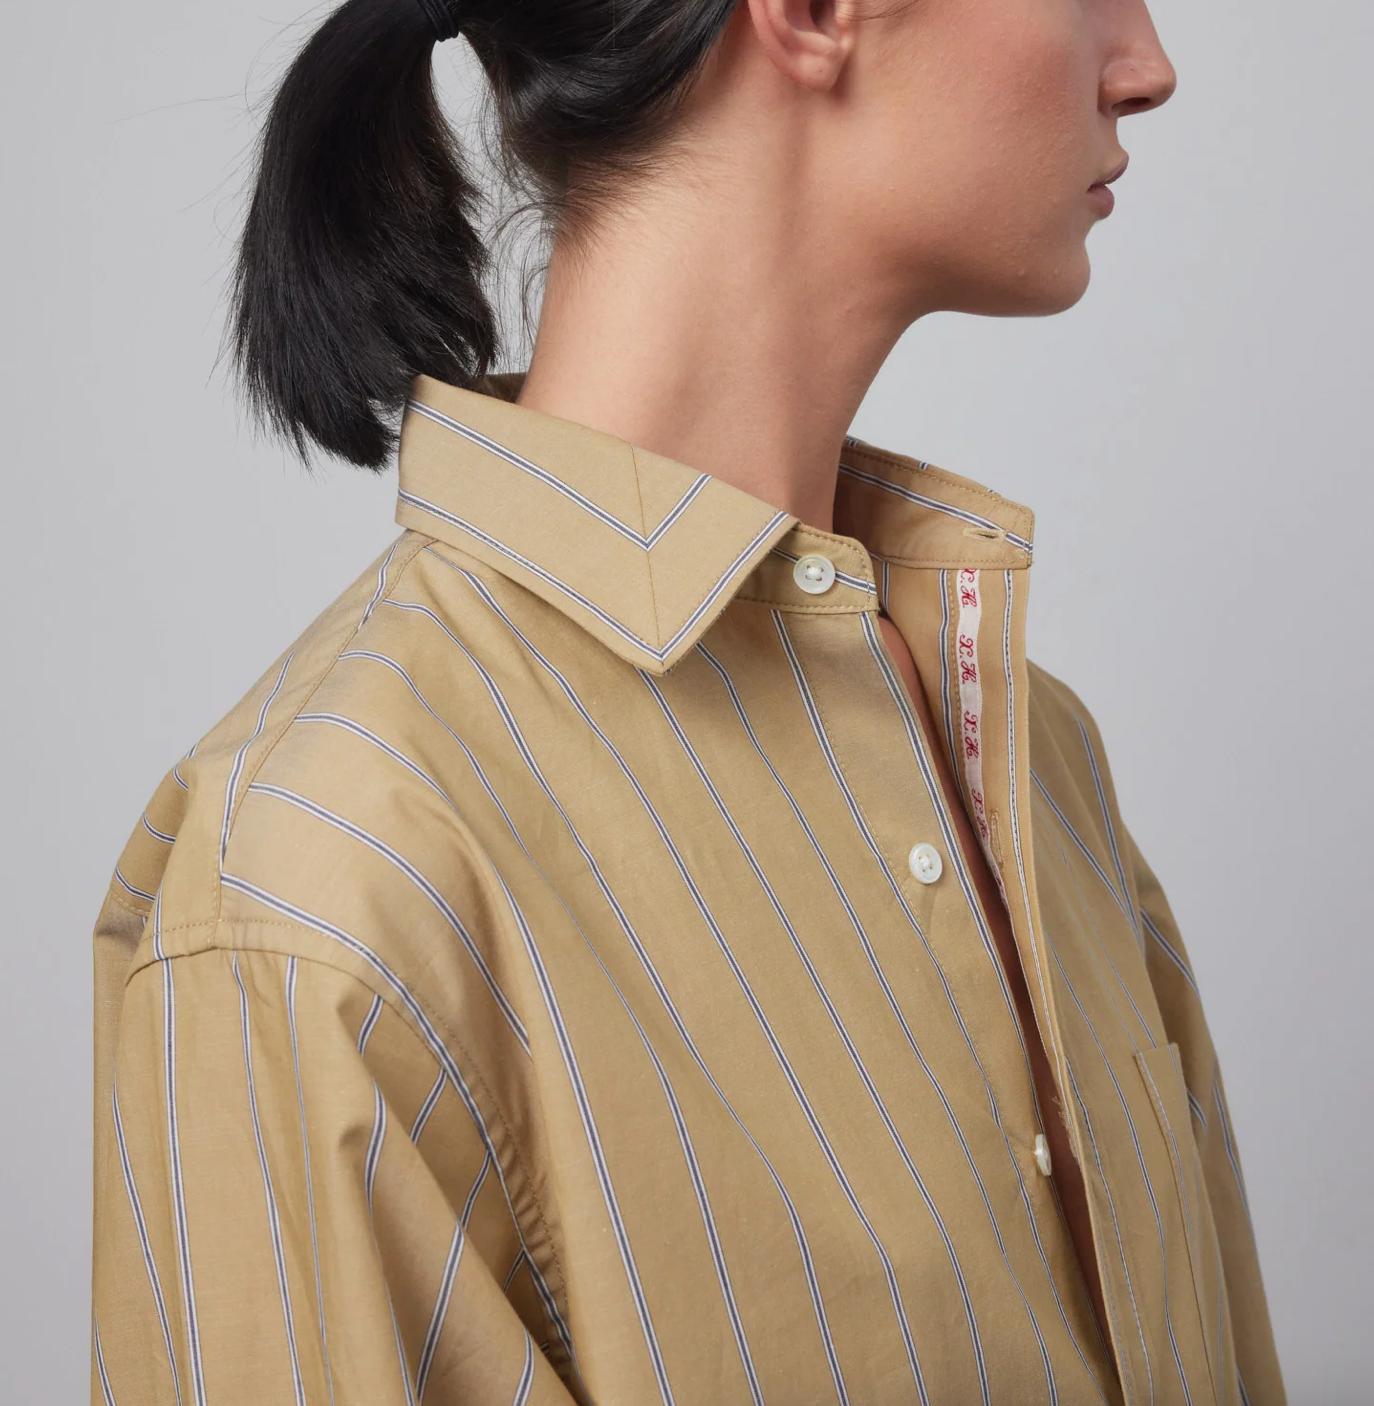 Product Image for Nolan Shirt, Striped Khaki Yarn Dye